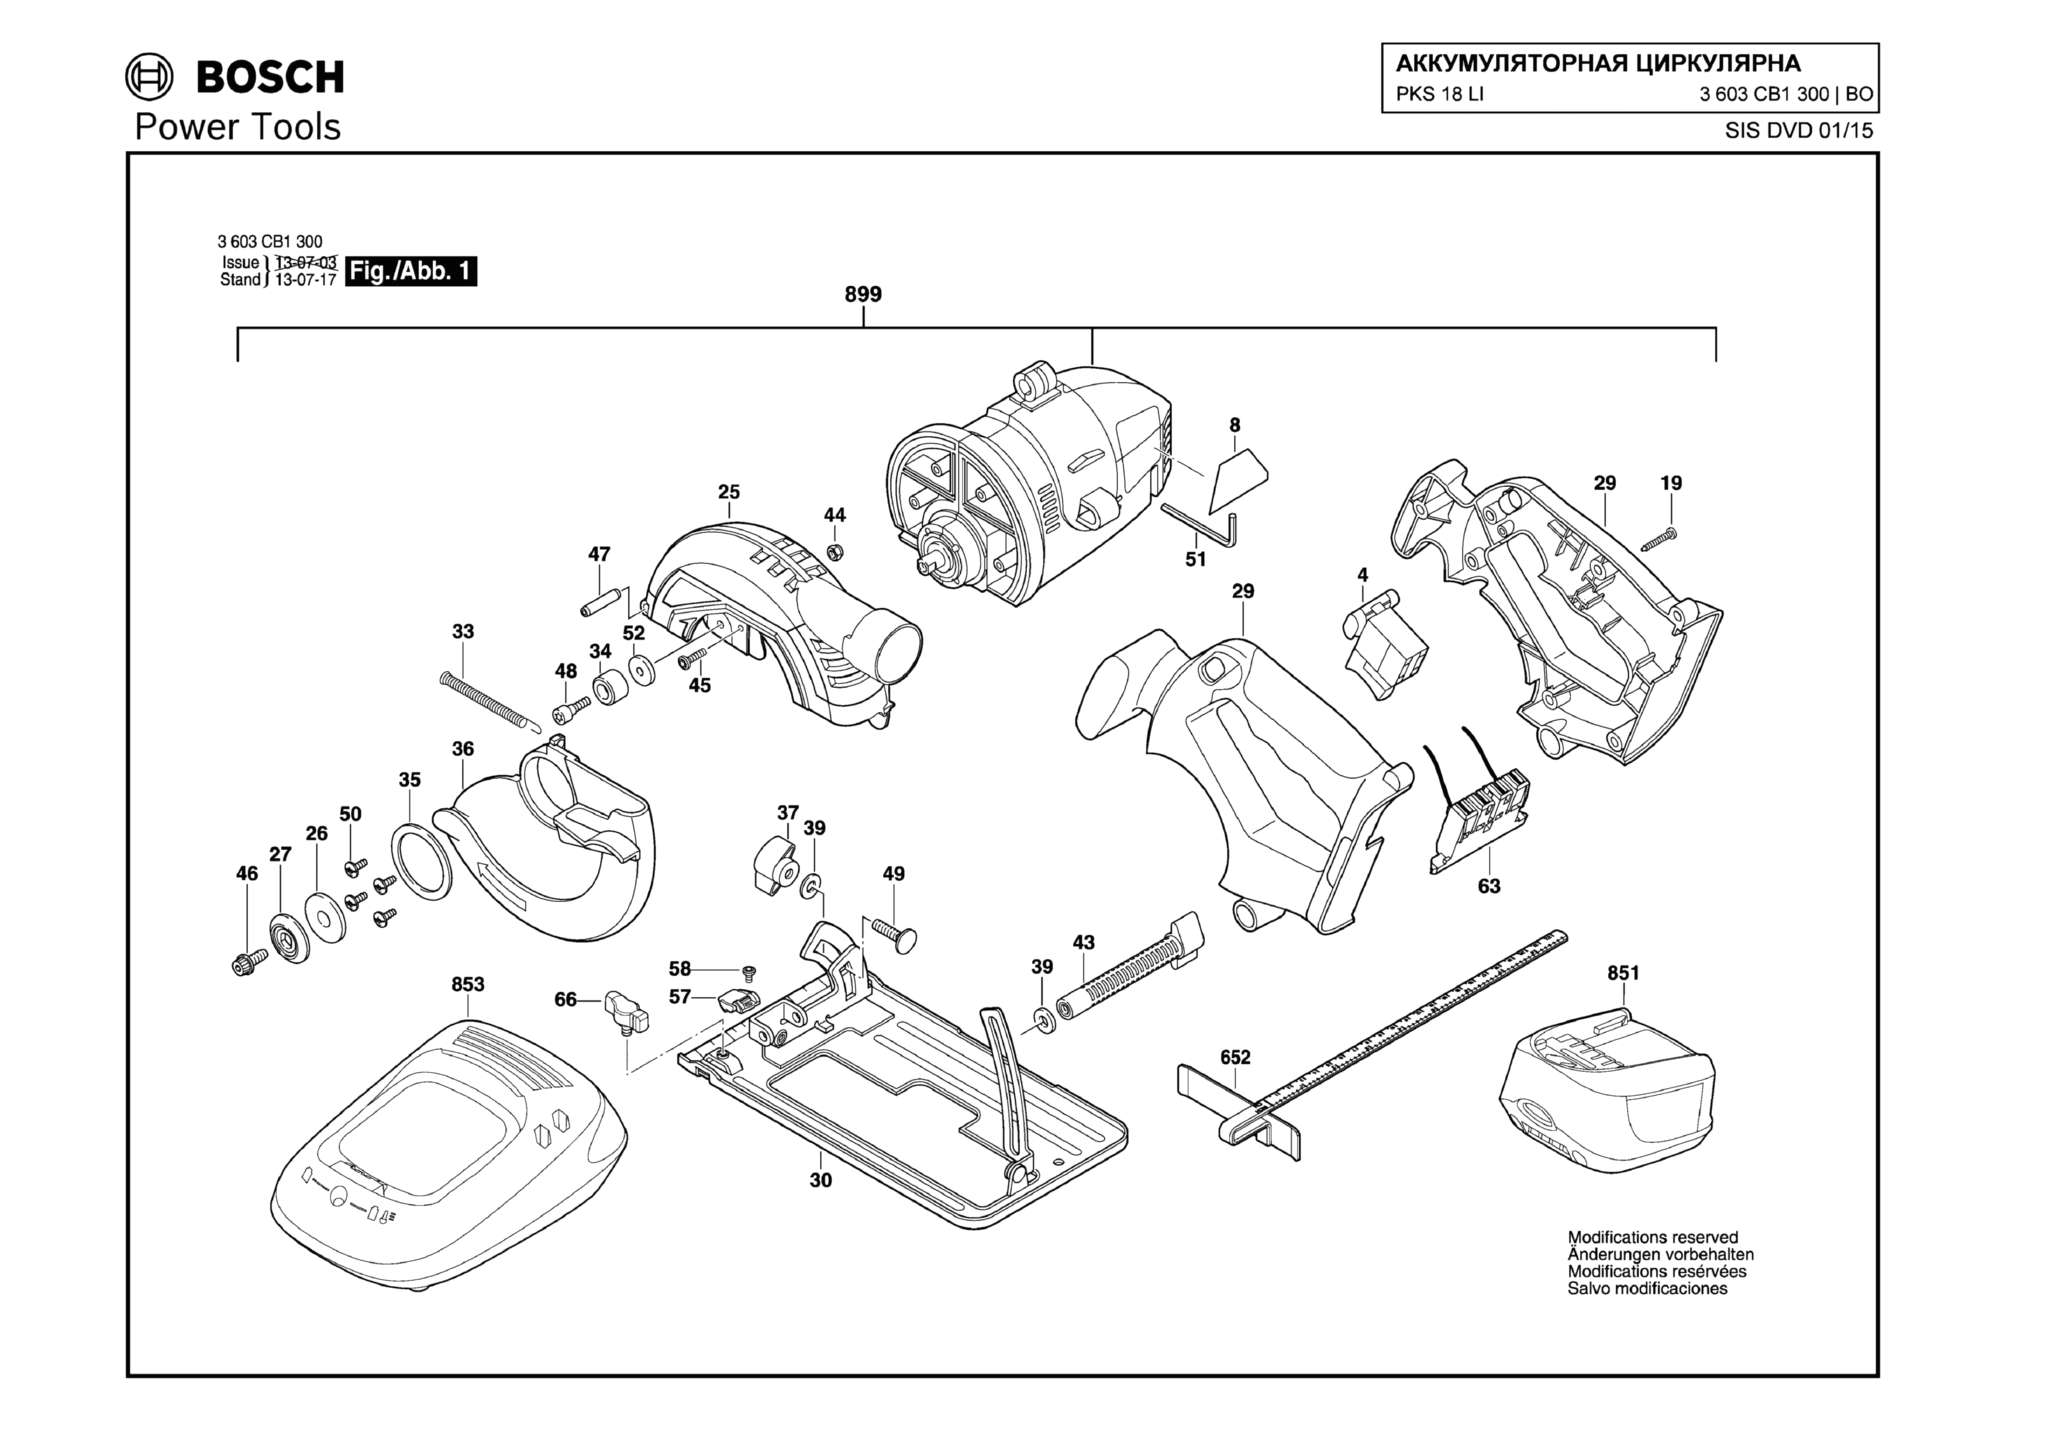 Запчасти, схема и деталировка Bosch PKS 18 LI (ТИП 3603CB1300)